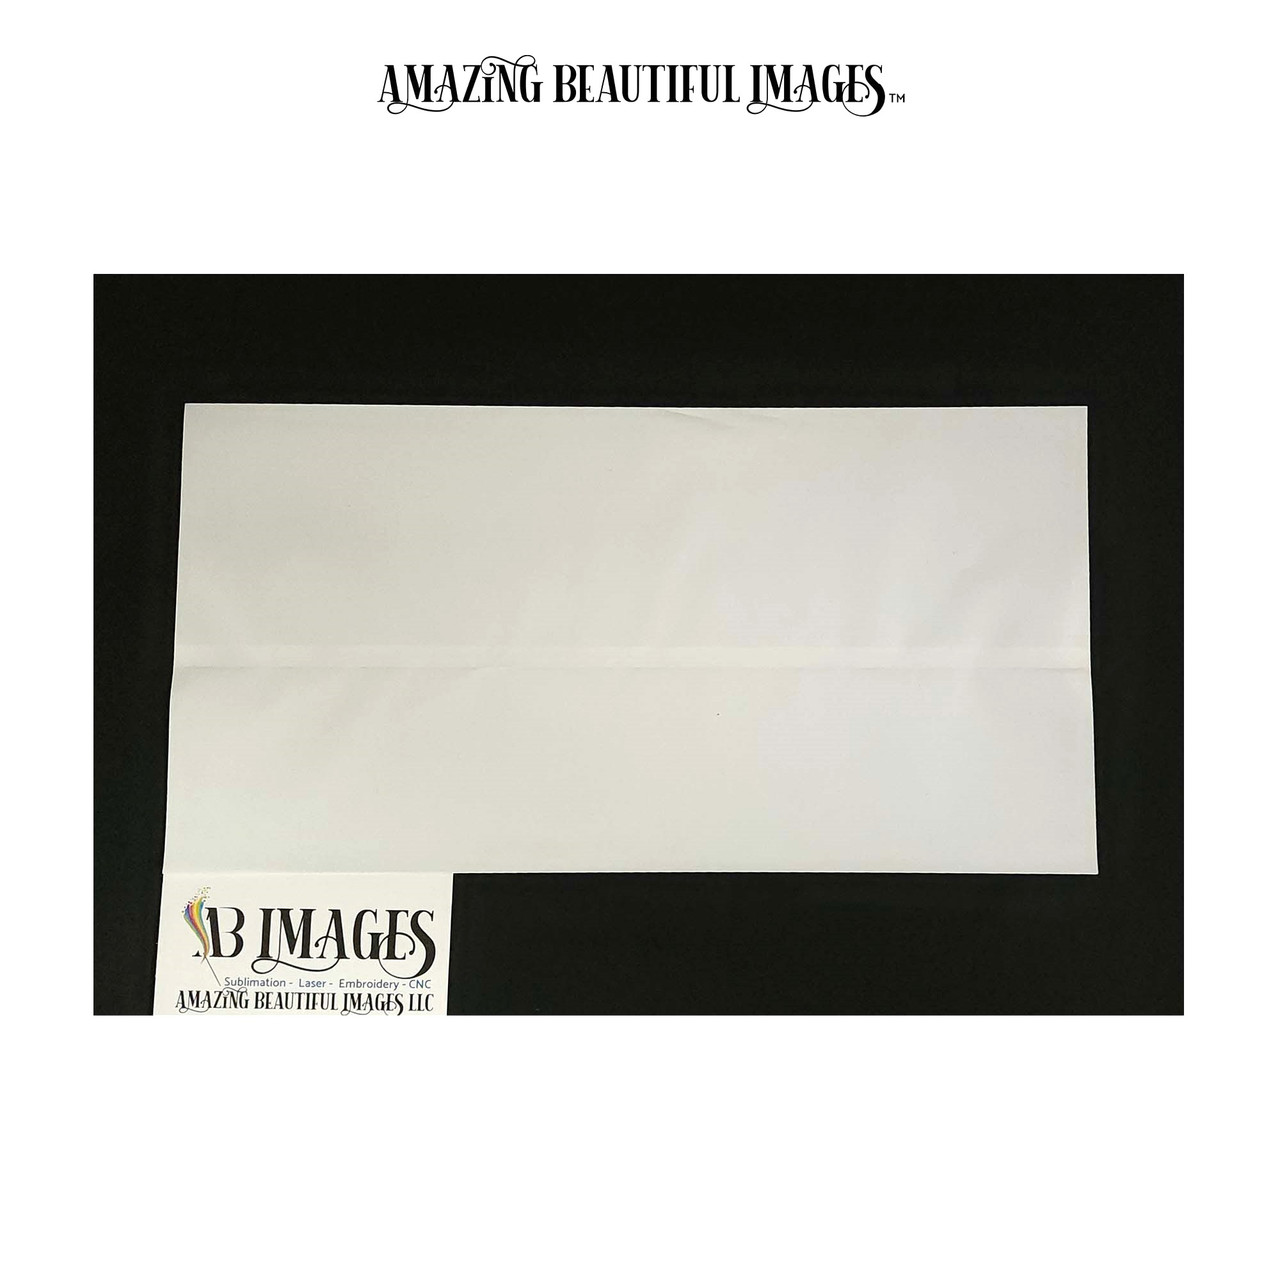 20 Sublimation Shrink Wrap Sleeves,8x8 Inch White Sublimation